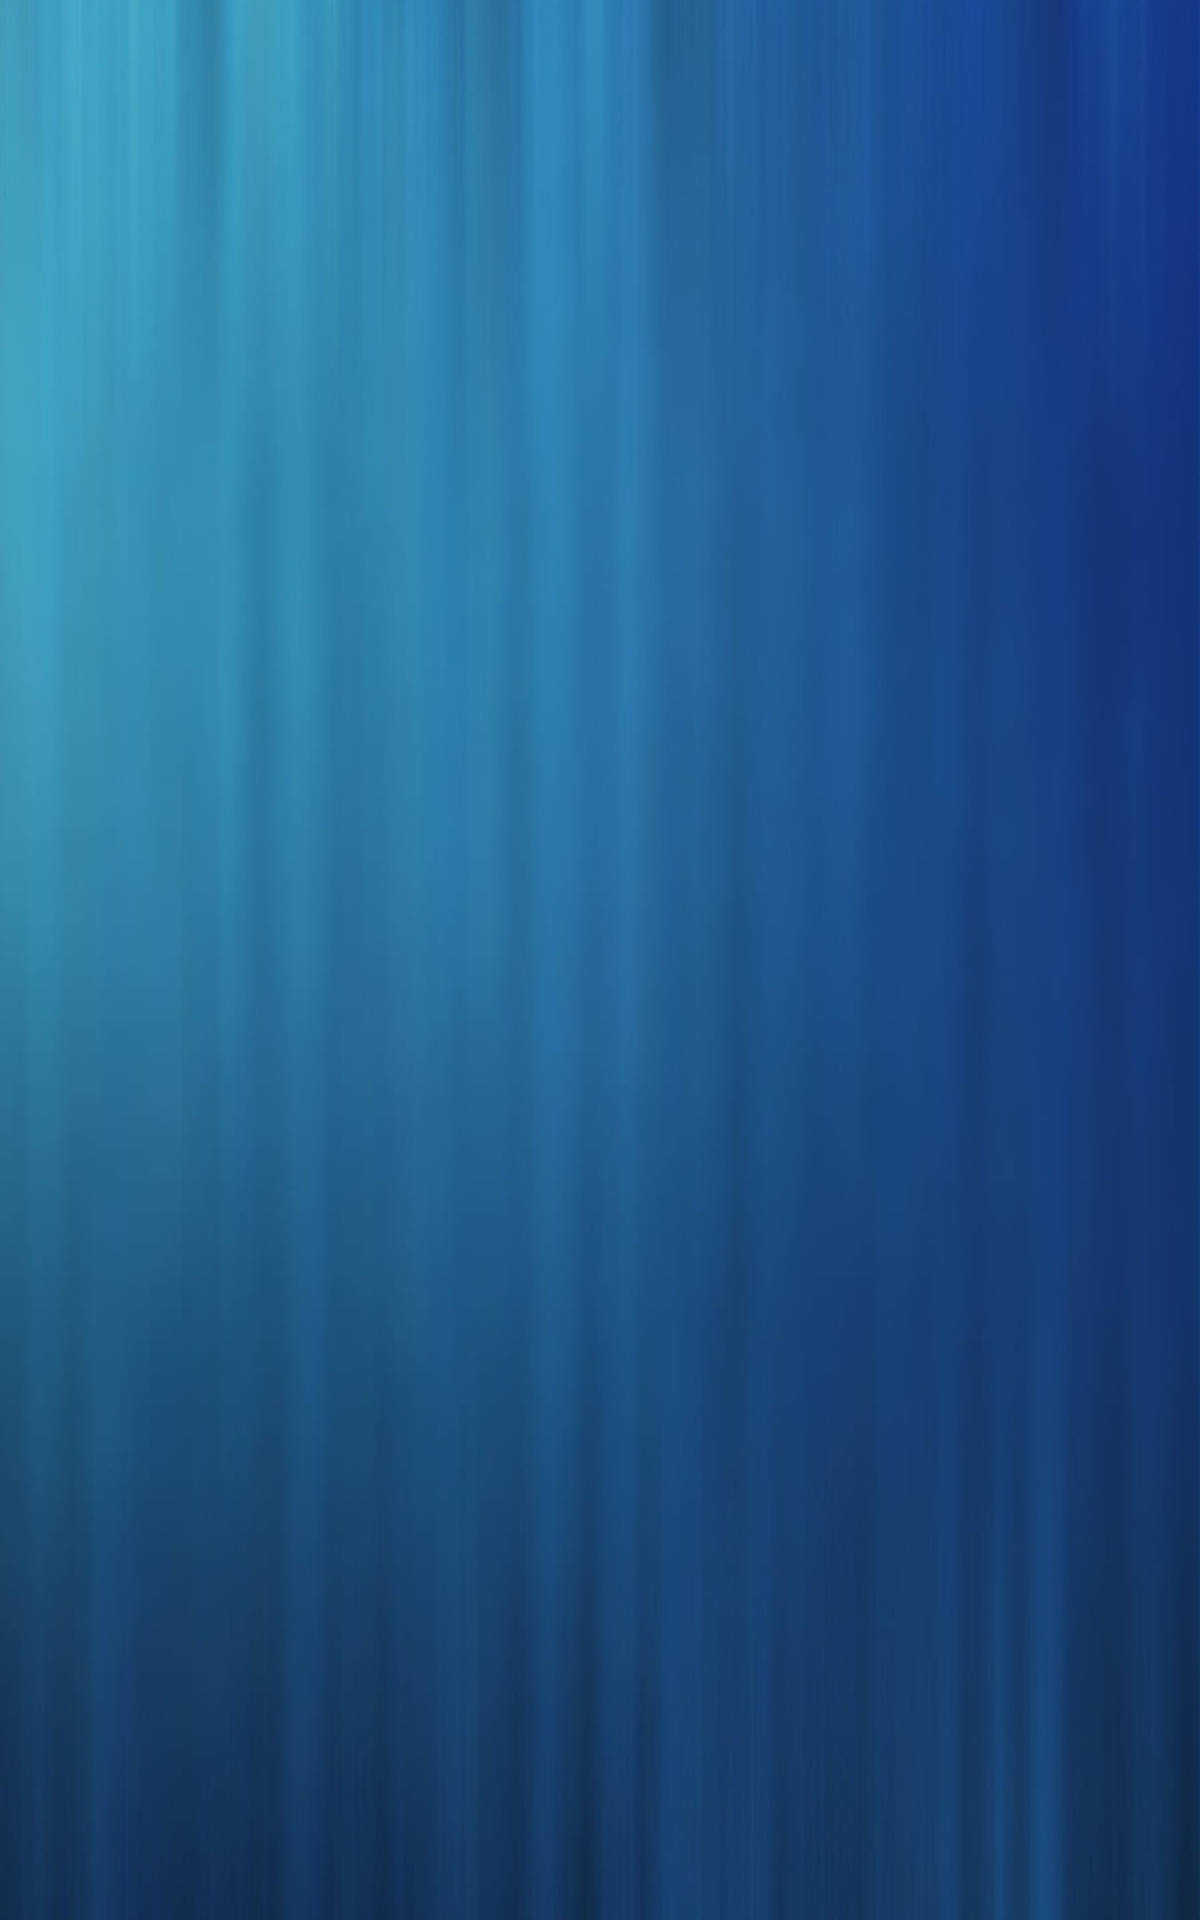 Plain Blue Curtain Texture Background